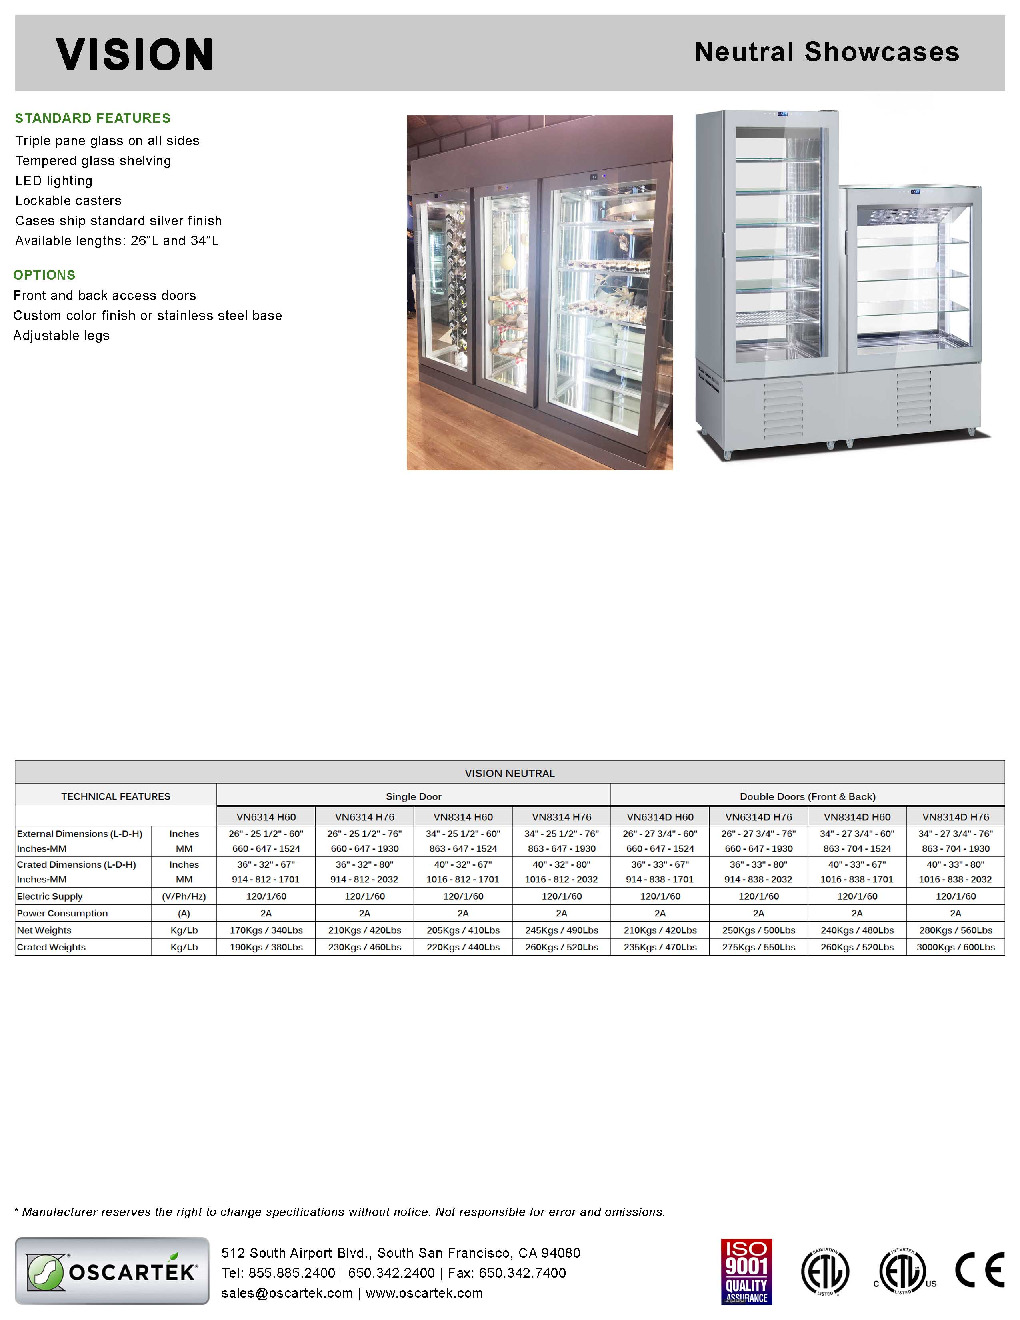 Oscartek VISION VN6314D H76 Non-Refrigerated Bakery Display Case